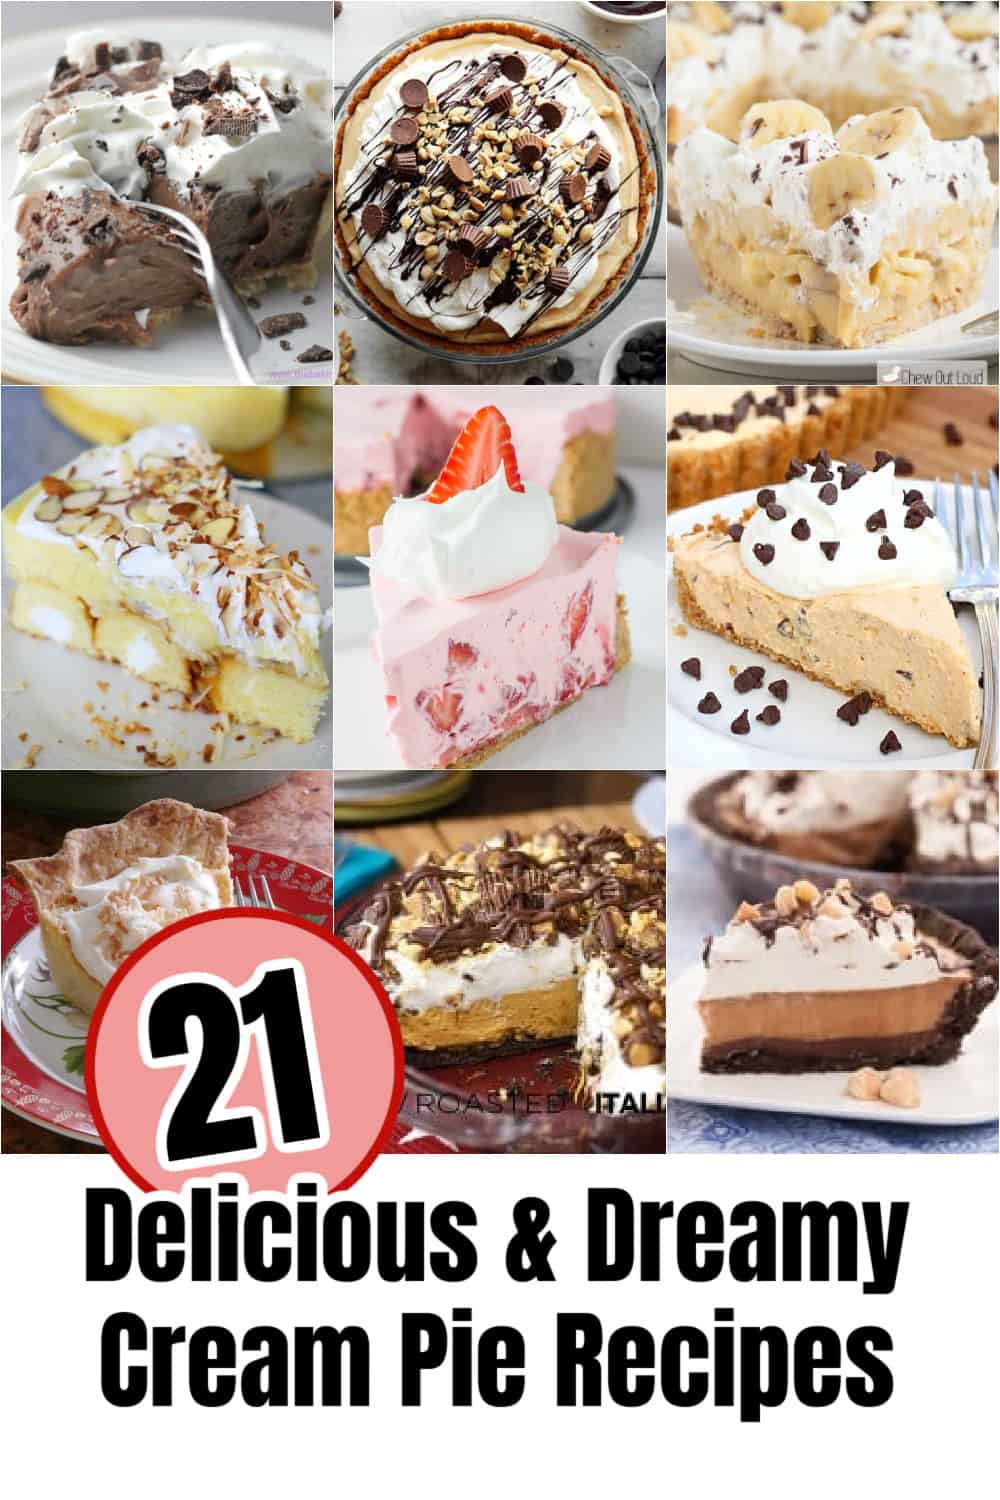 21 Delicious & Dreamy Cream Pie Recipes